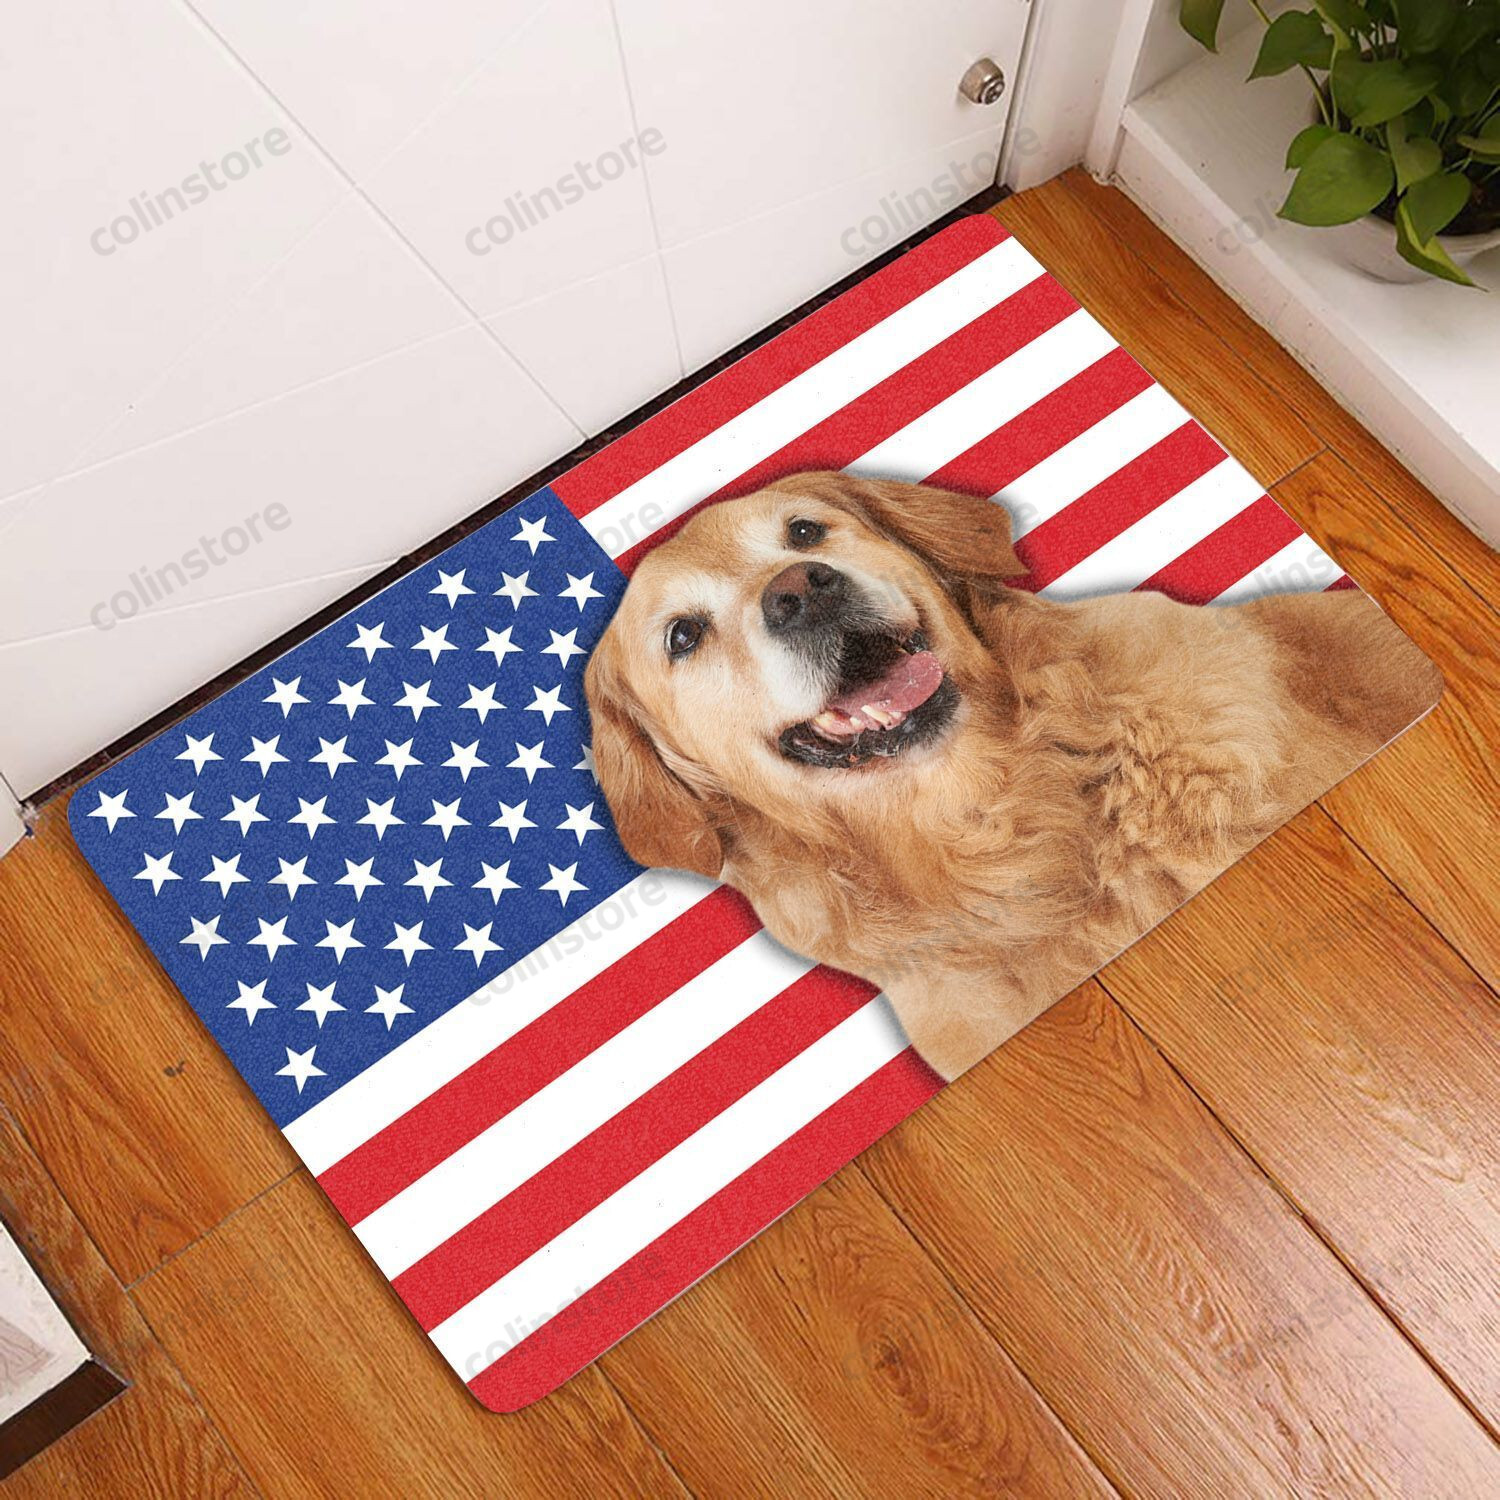 Amazing Golden Retriever With American Flag - Dog Doormat Welcome Mat